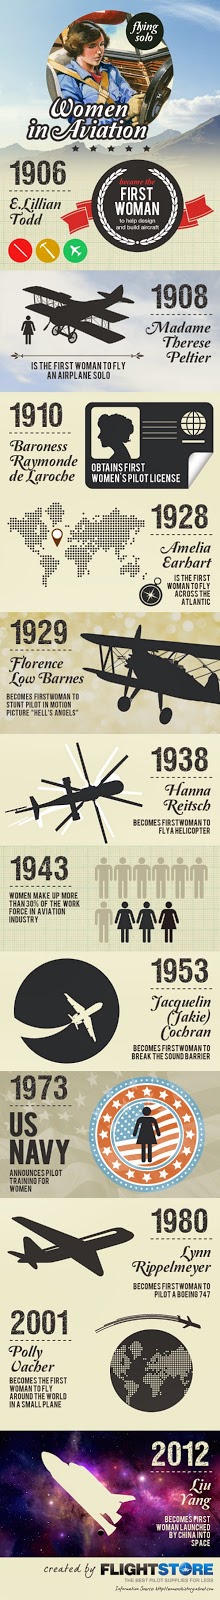 History of Women in Aviation 